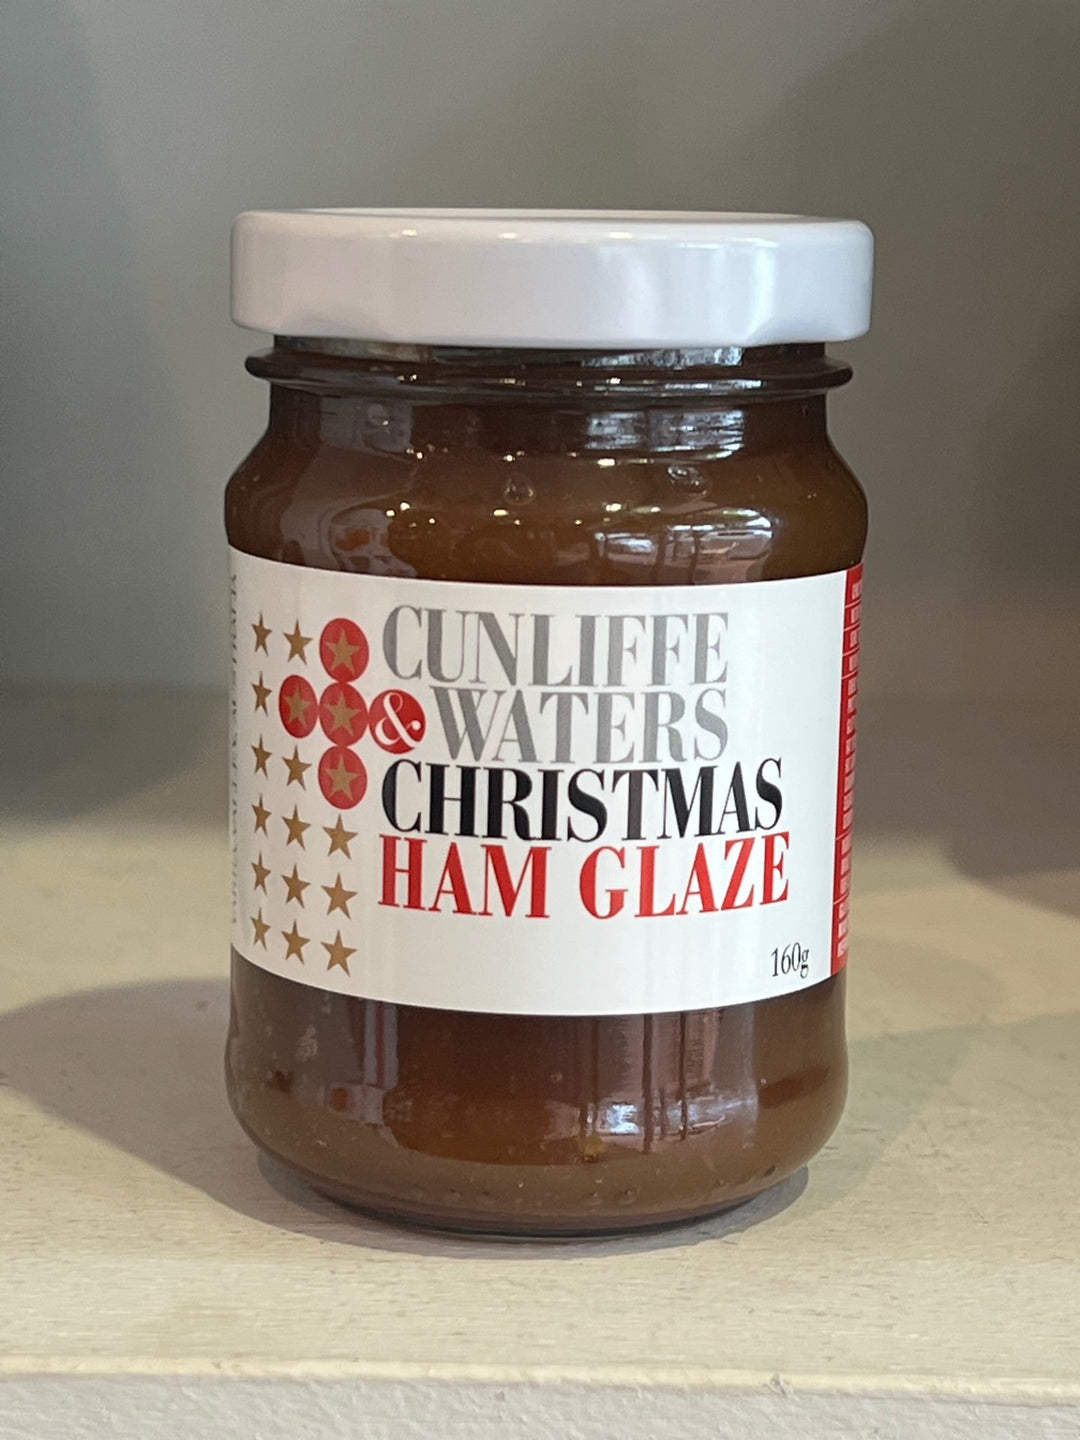 Cunliffe & Waters Christmas Ham Glaze